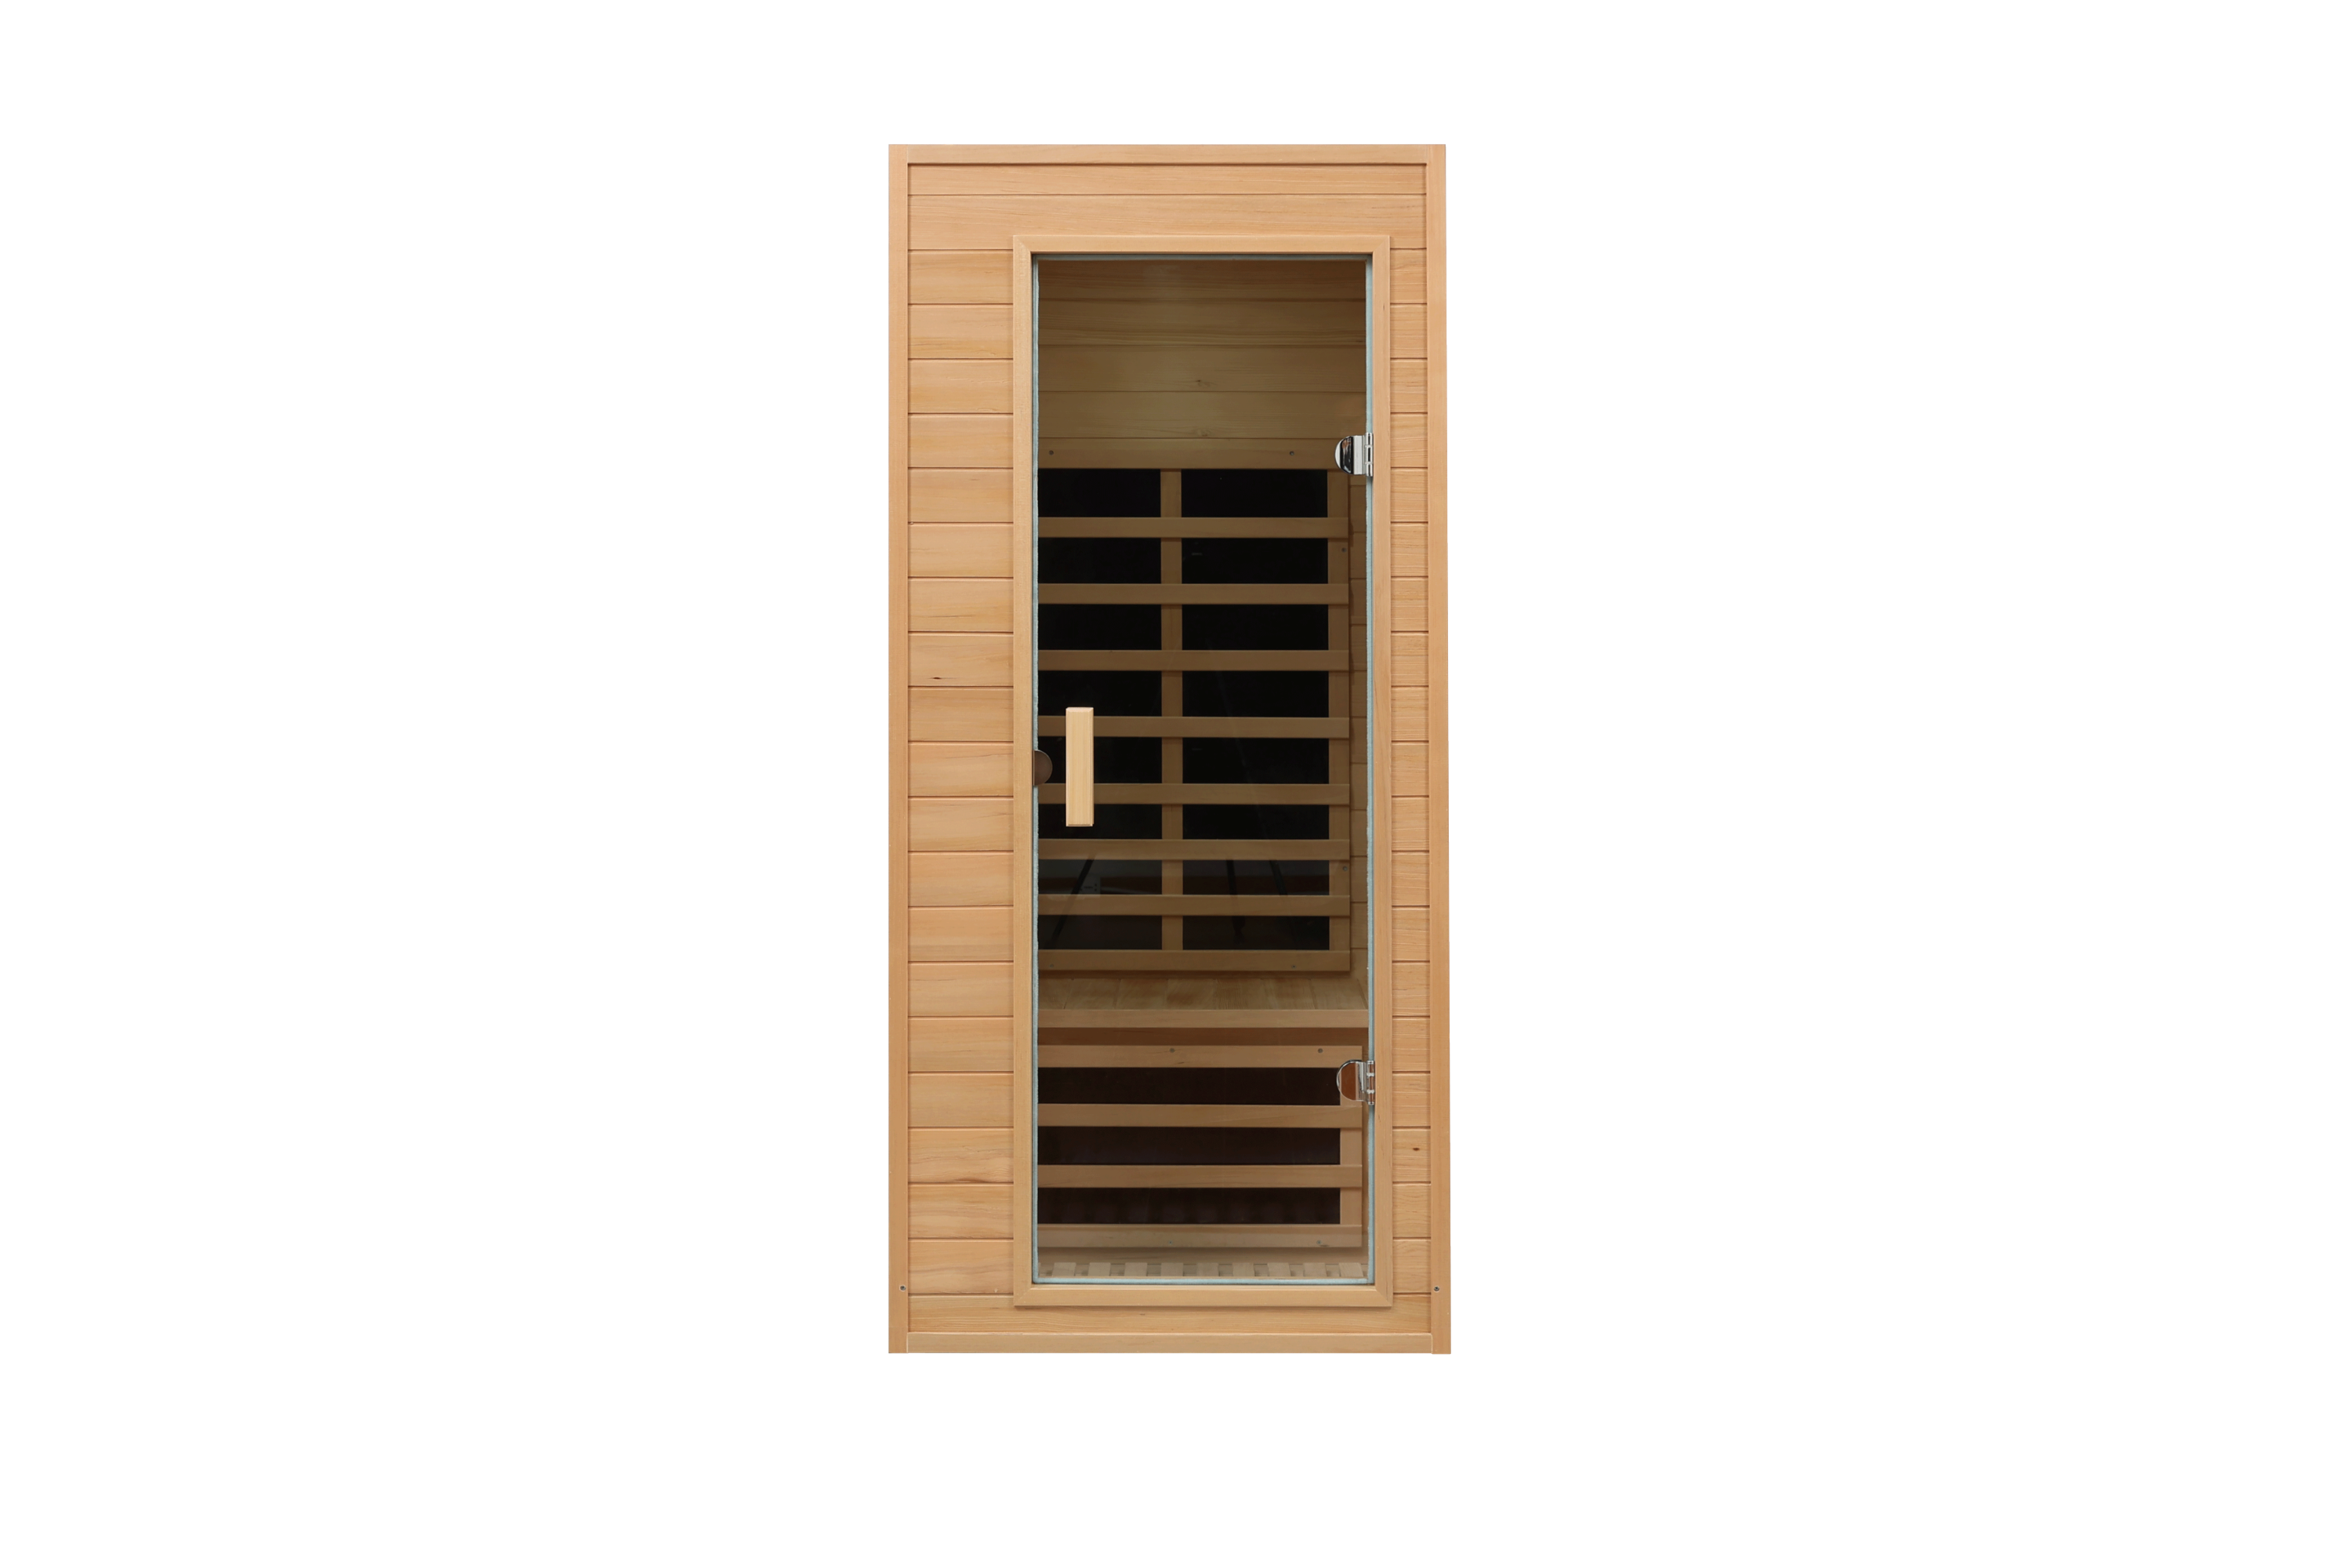 Far Infrared Sauna Home Sauna Spa Room Low-EMF Hemlock Wood Indoor Saunas